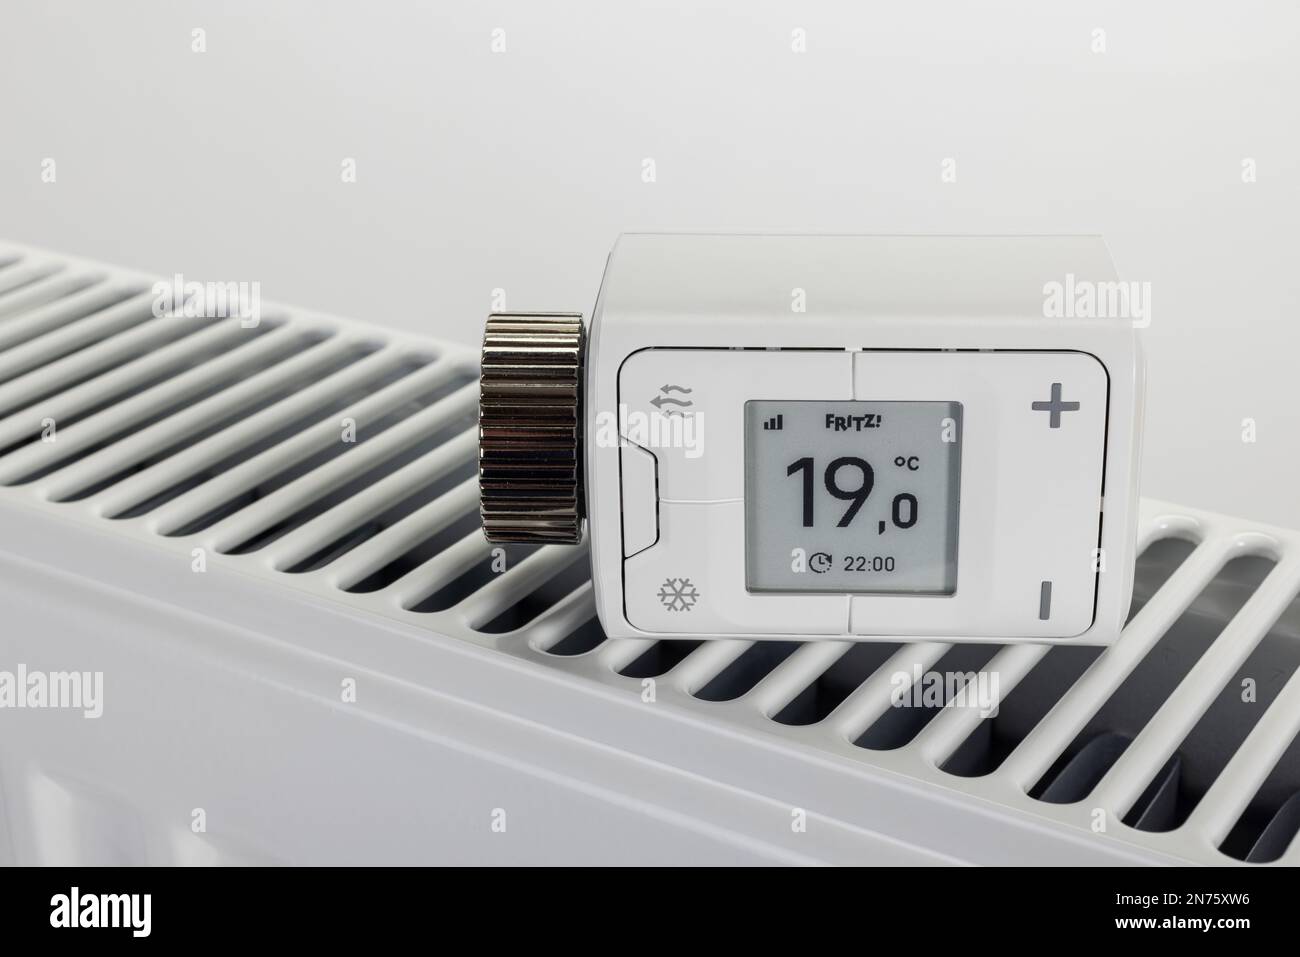 WLAN radiator thermostat FRITZ! DECT 302, display shows 1ö°C., on